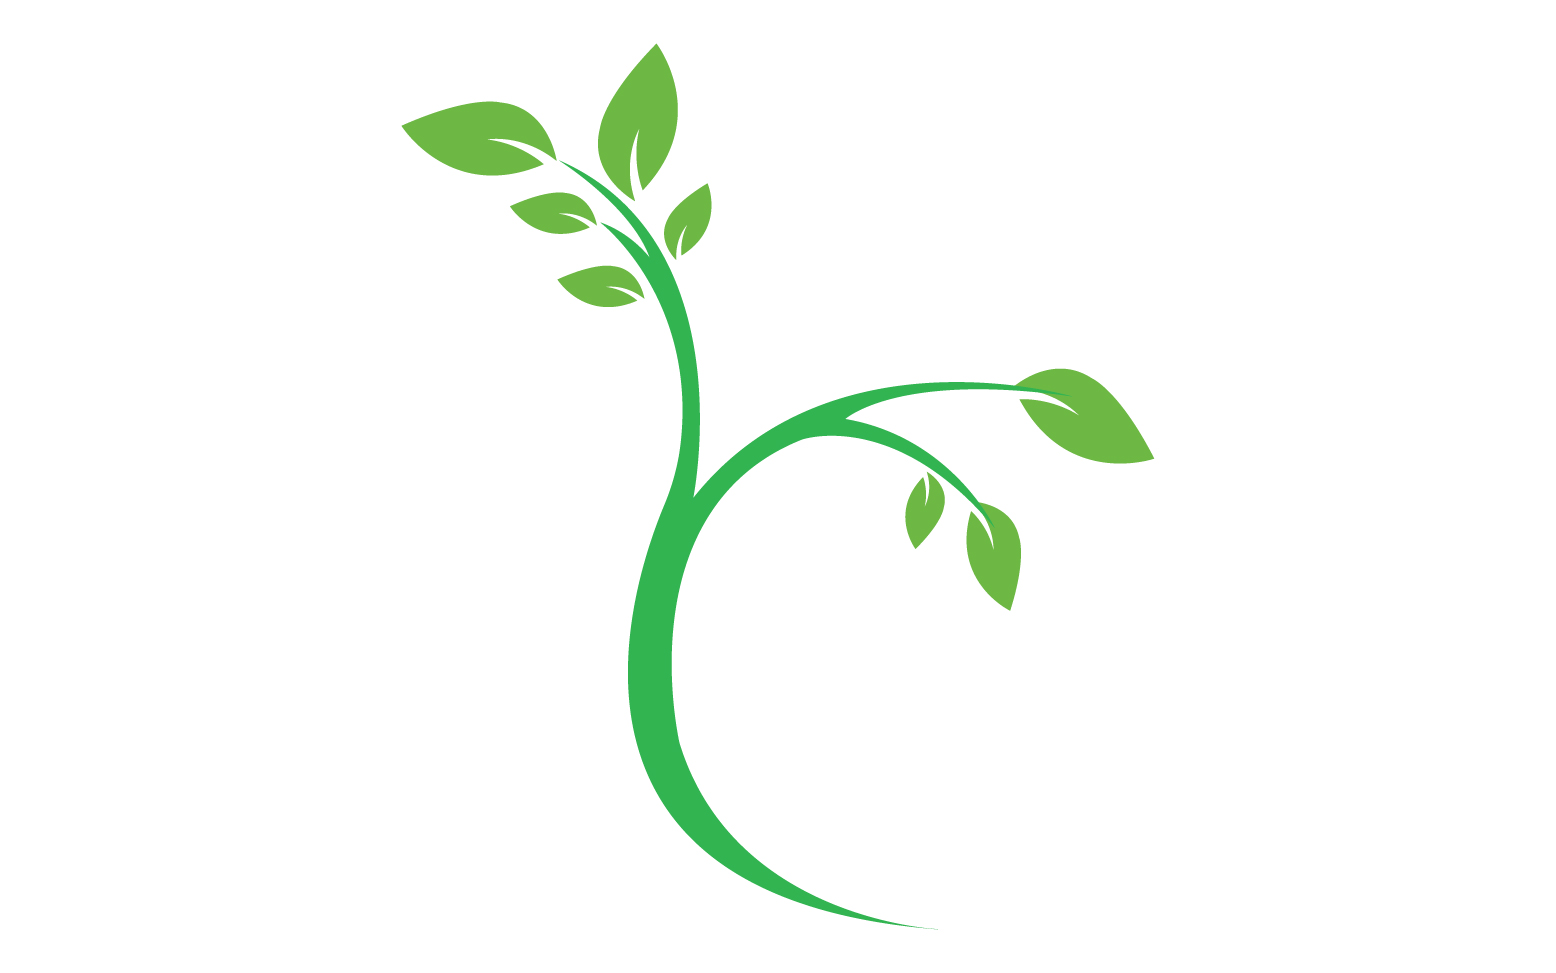 Leaf green ecology tree element icon version v20